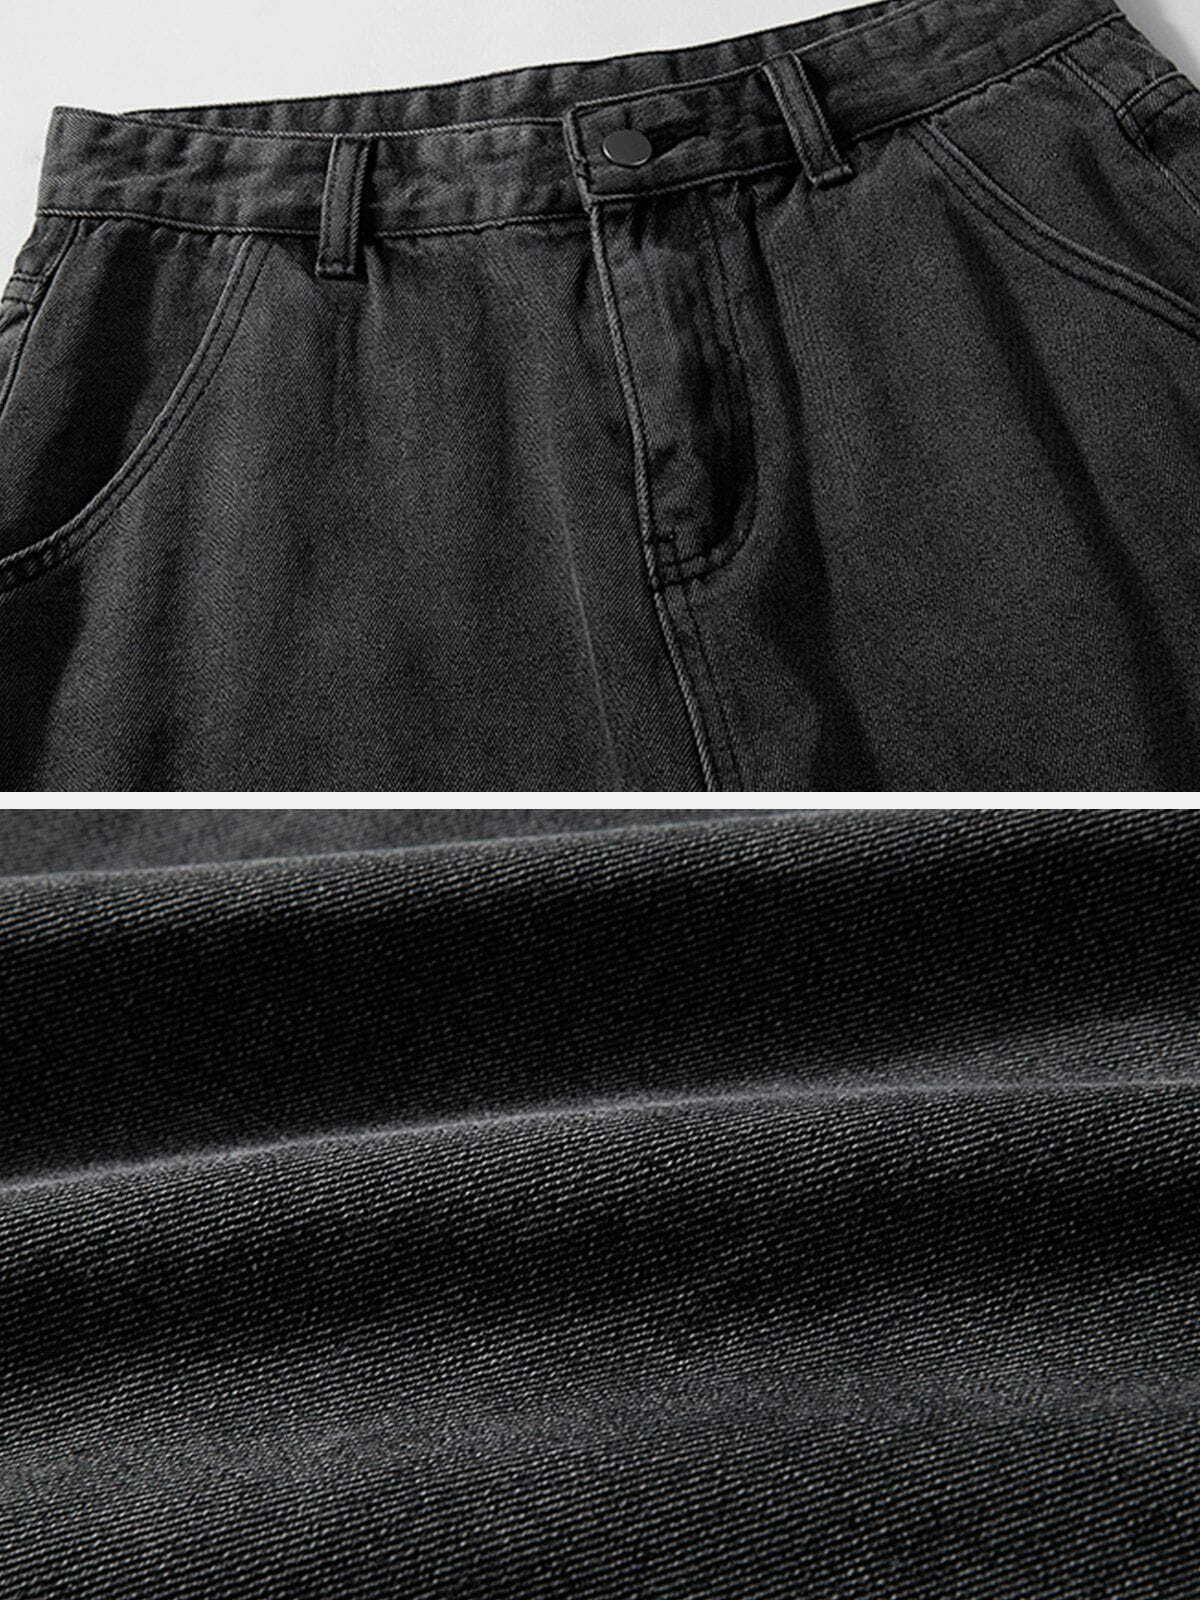 retro shredded denim shorts edgy streetwear staple 8889